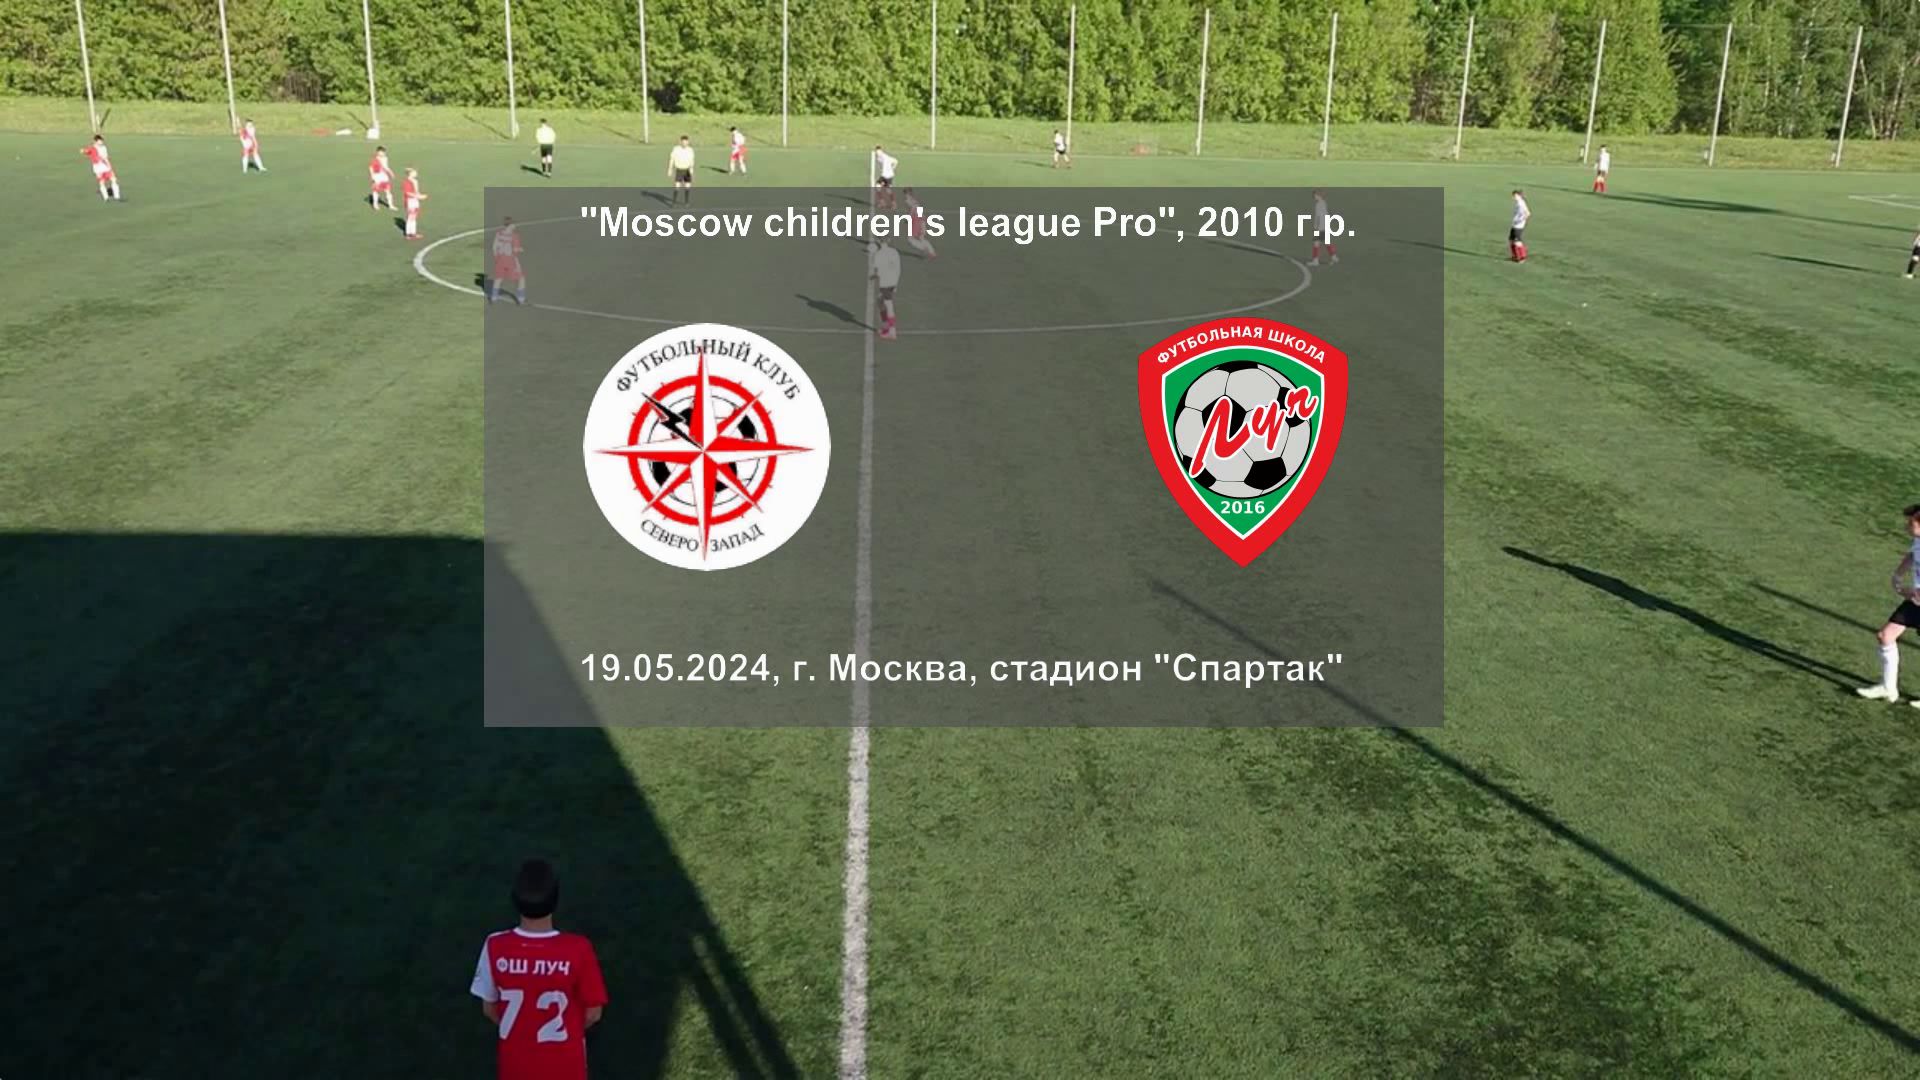 19.05.2024, "Moscow children's league Pro", ФК СКТ "Северо-Запад" (Москва) - ФШ "Луч" (Одинцово).